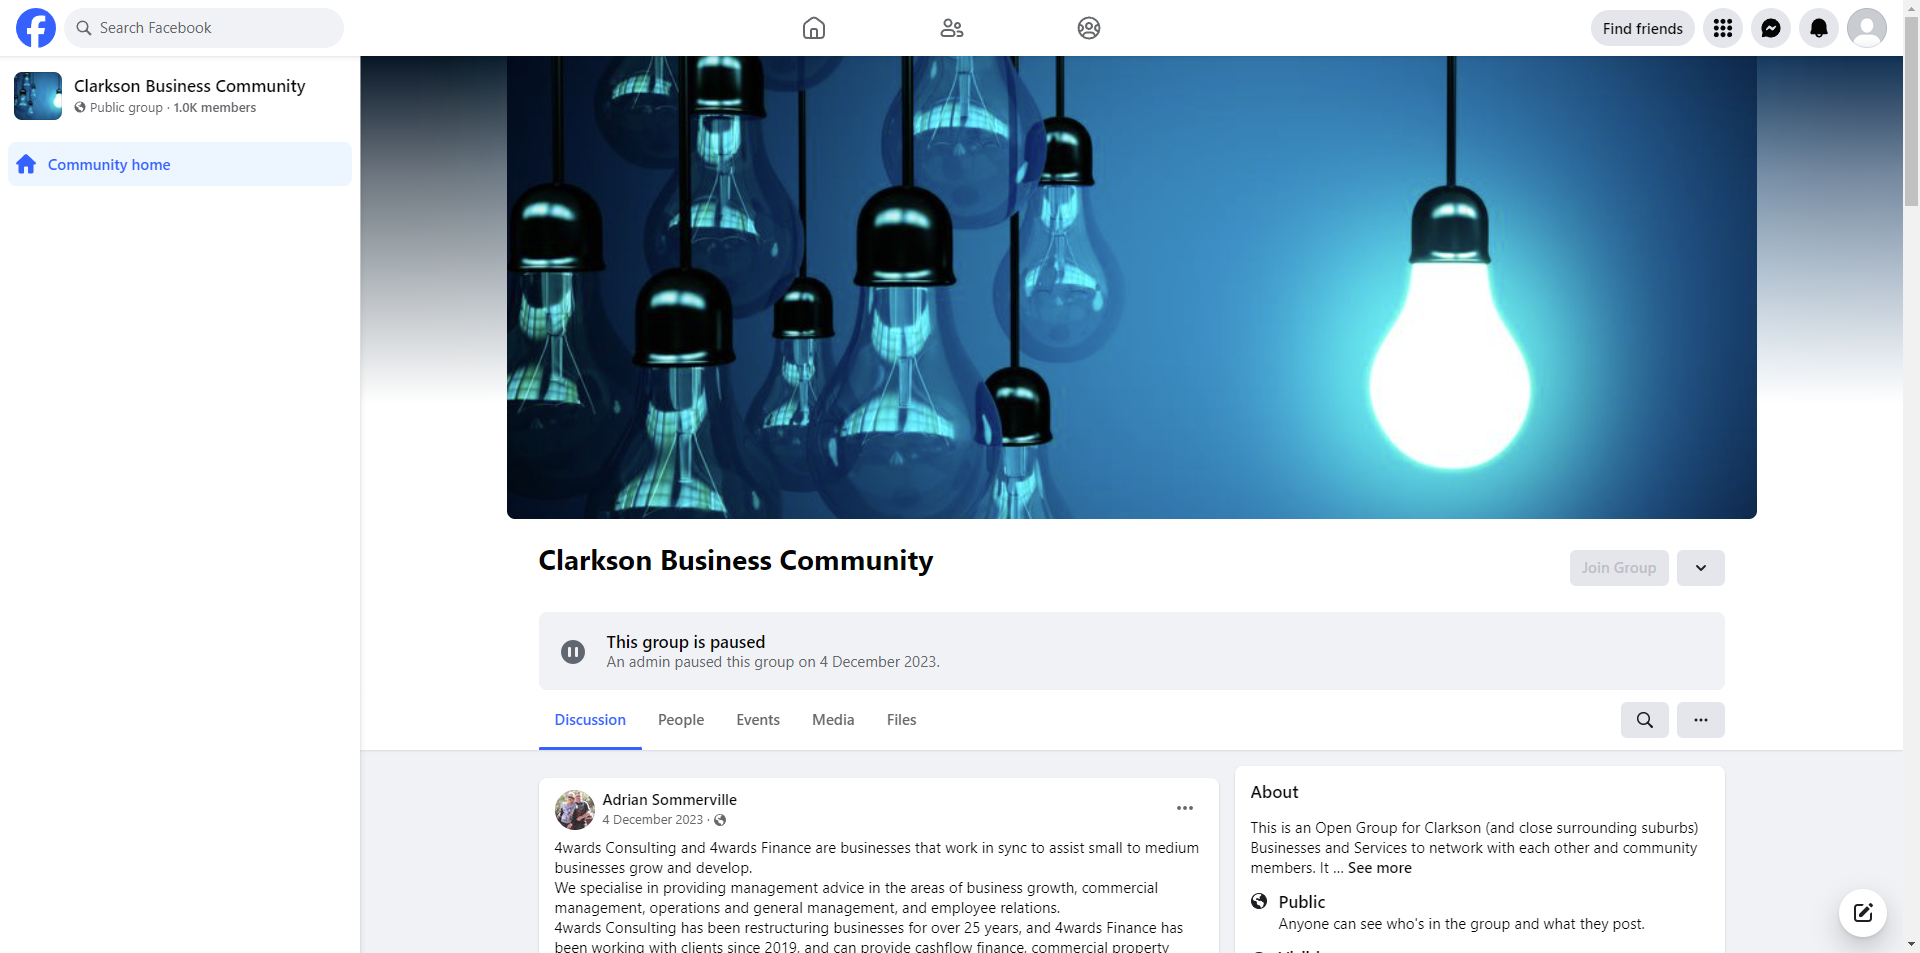 Clarkson Business Community